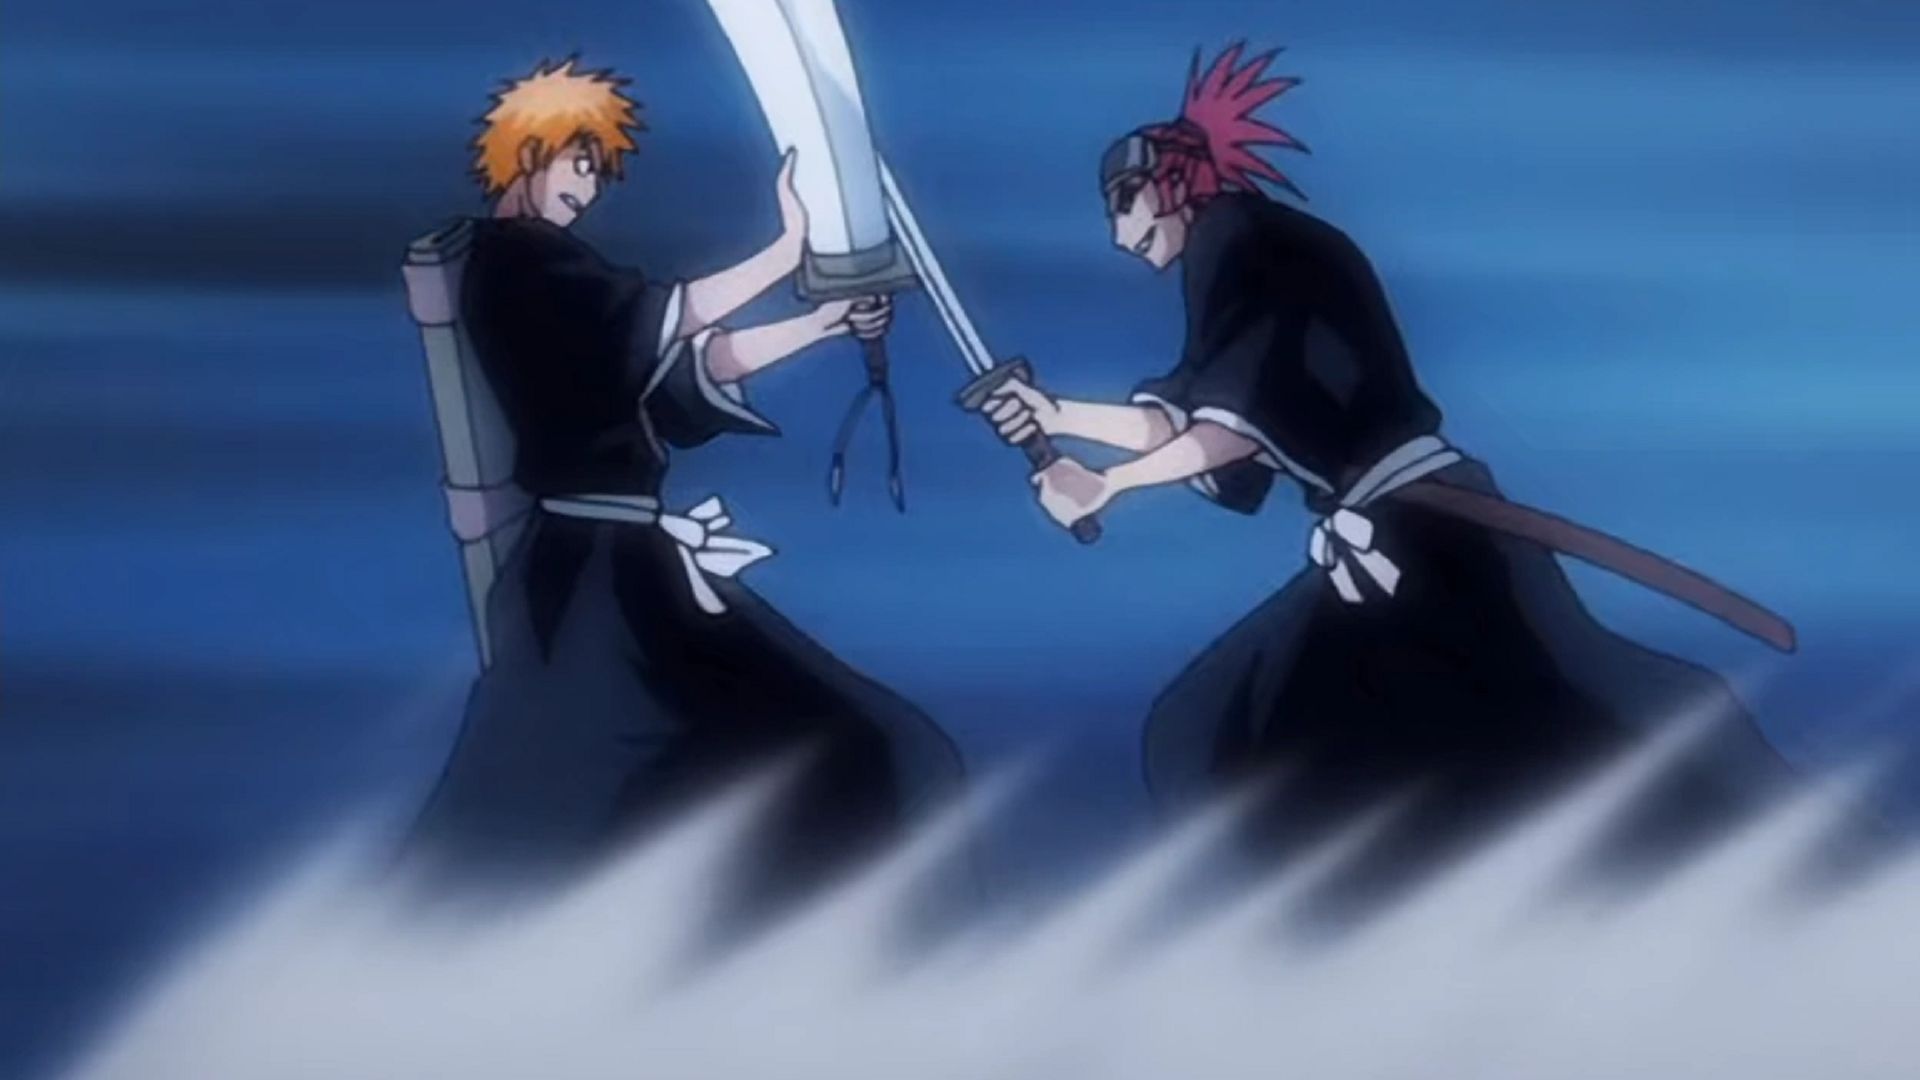 Ichigo vs Renji in Bleach (Image via Studio Pierrot)